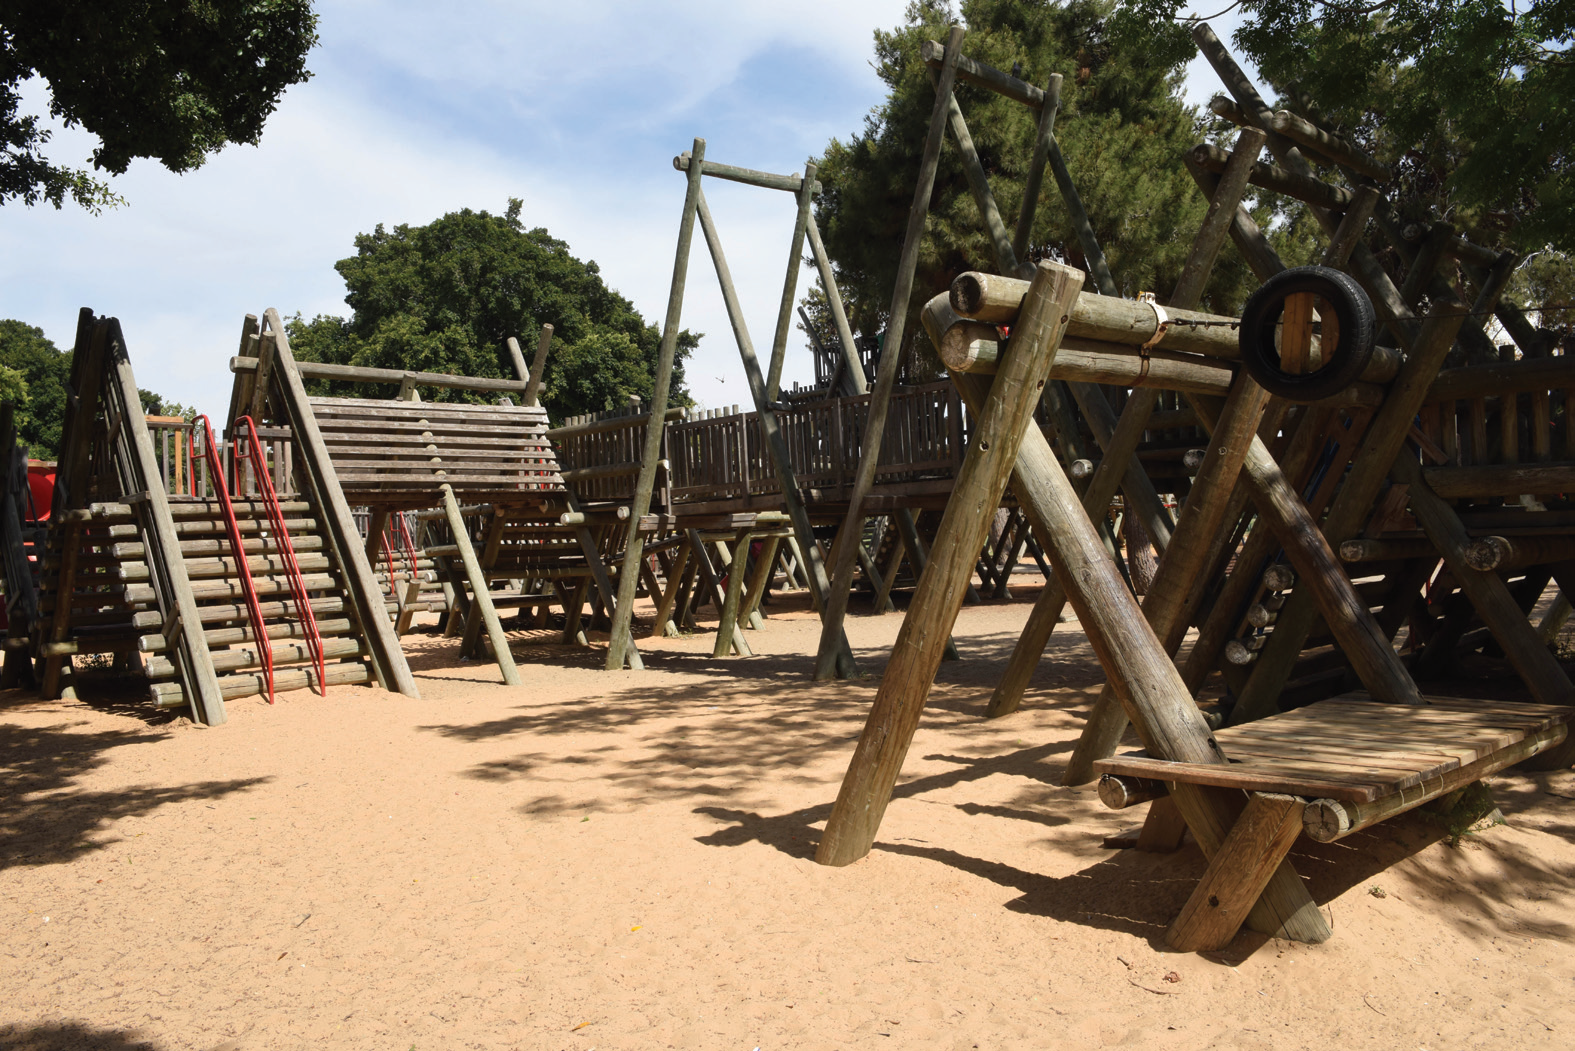 The Ofer Playground